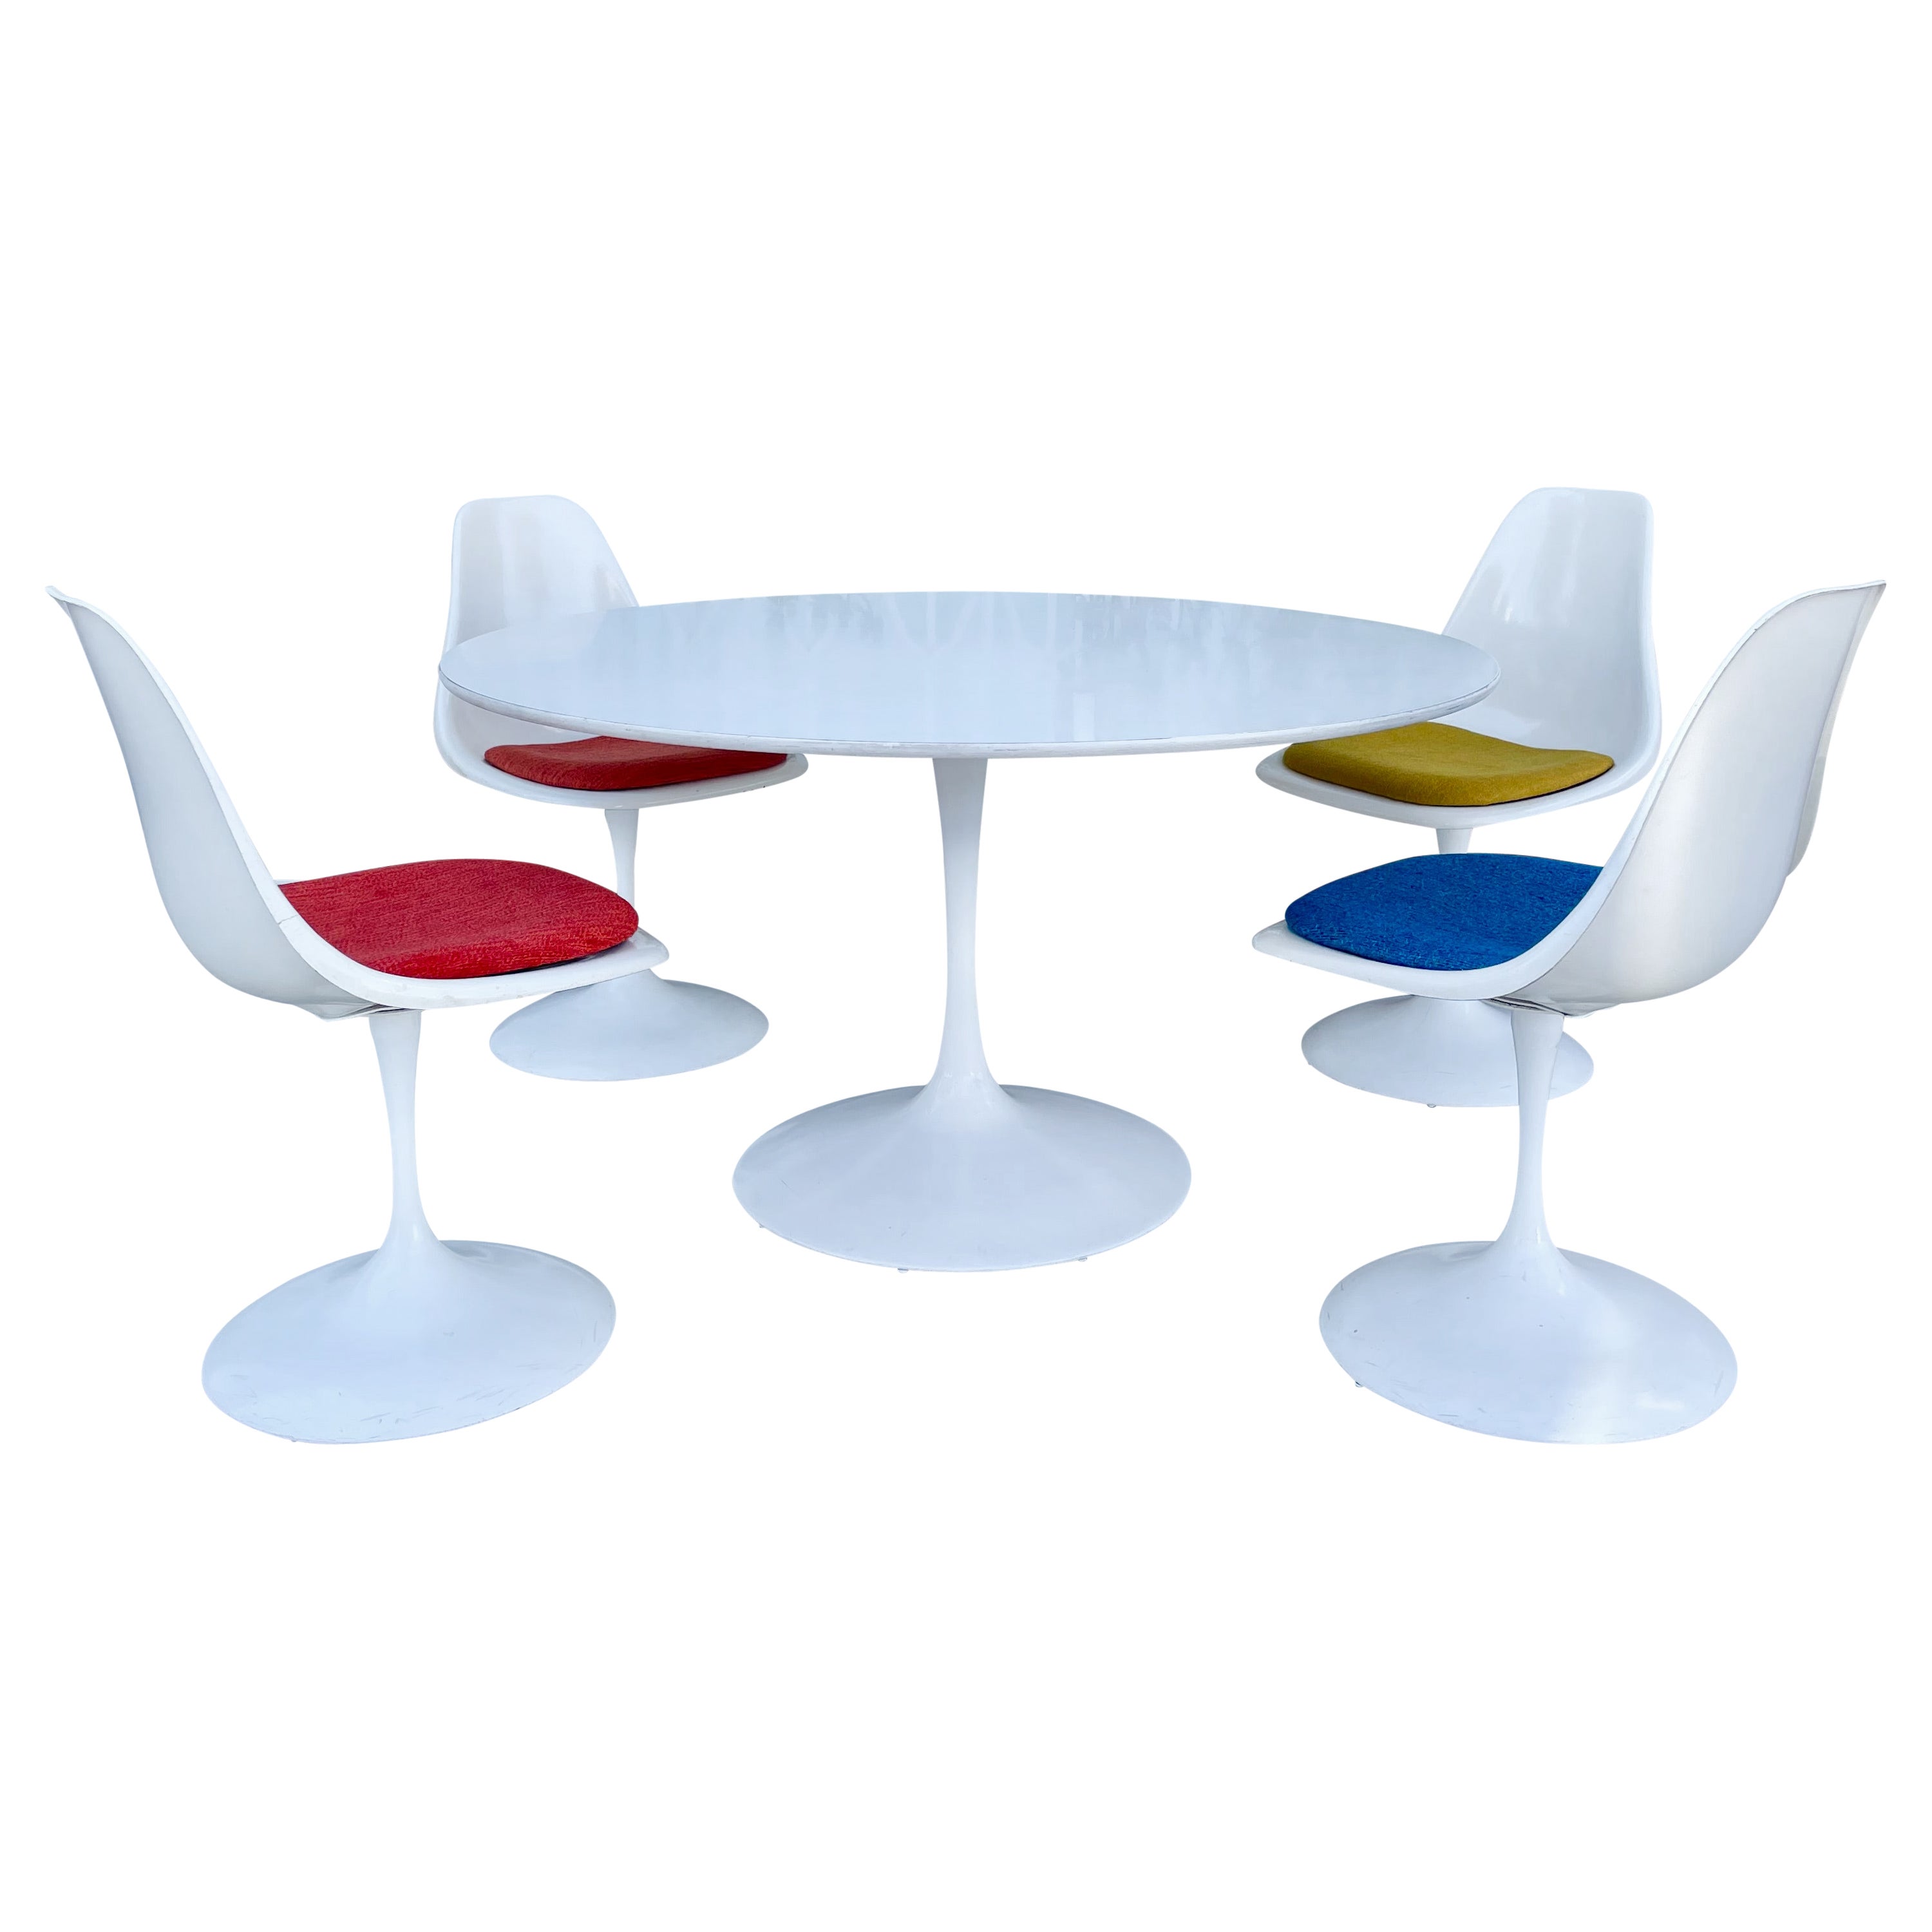 Midcentury Tulip Dining Table Set Styled After Eero Saarinen For Sale